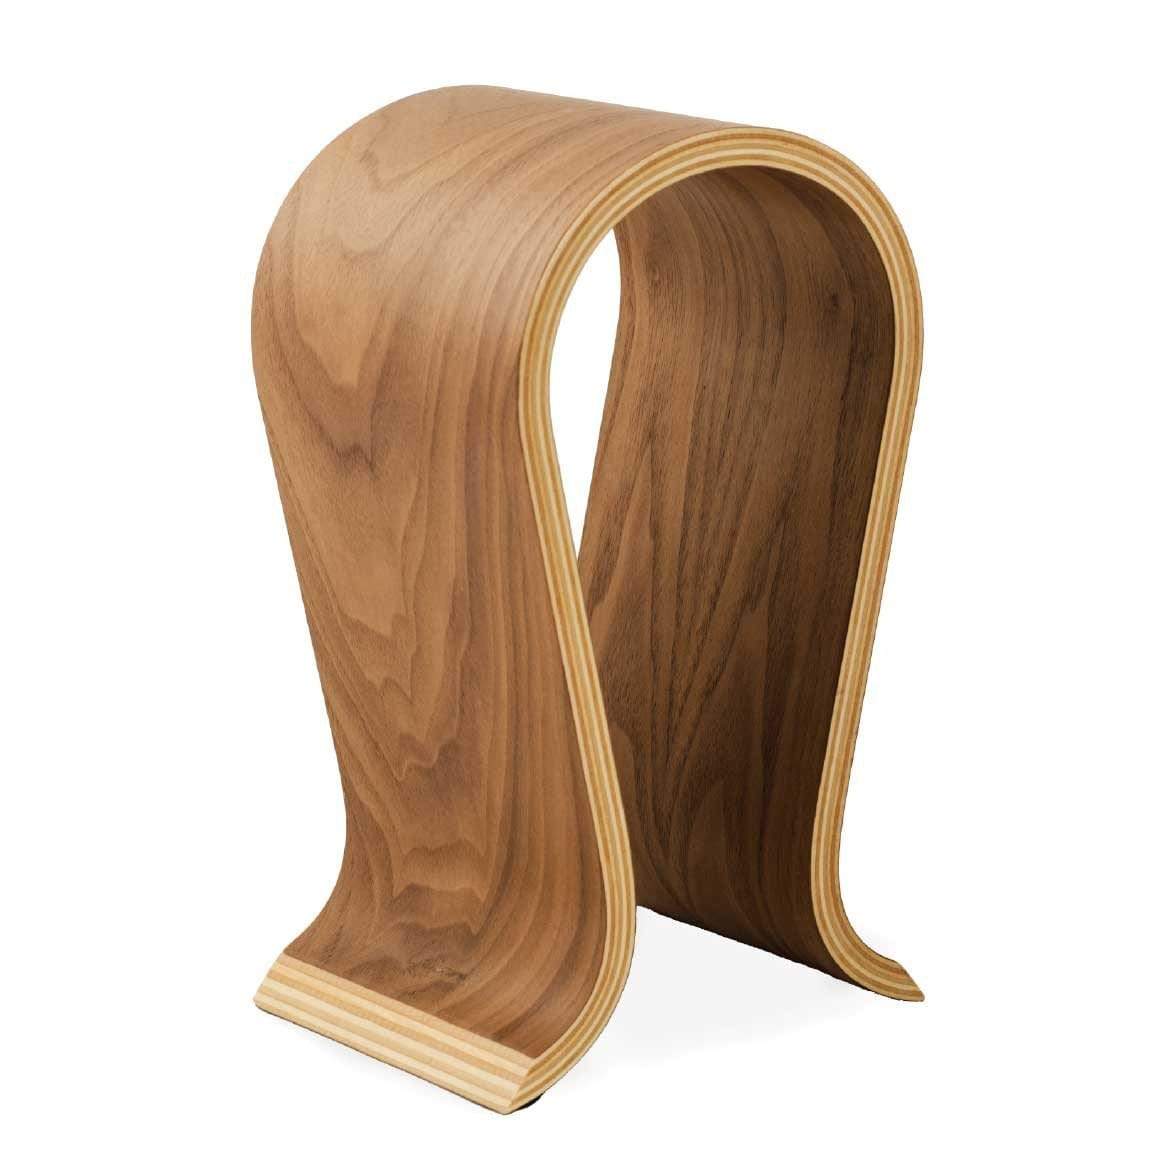 Headphone-Zone-Omega-Handcrafted Wooden Headphone Stand-Walnut